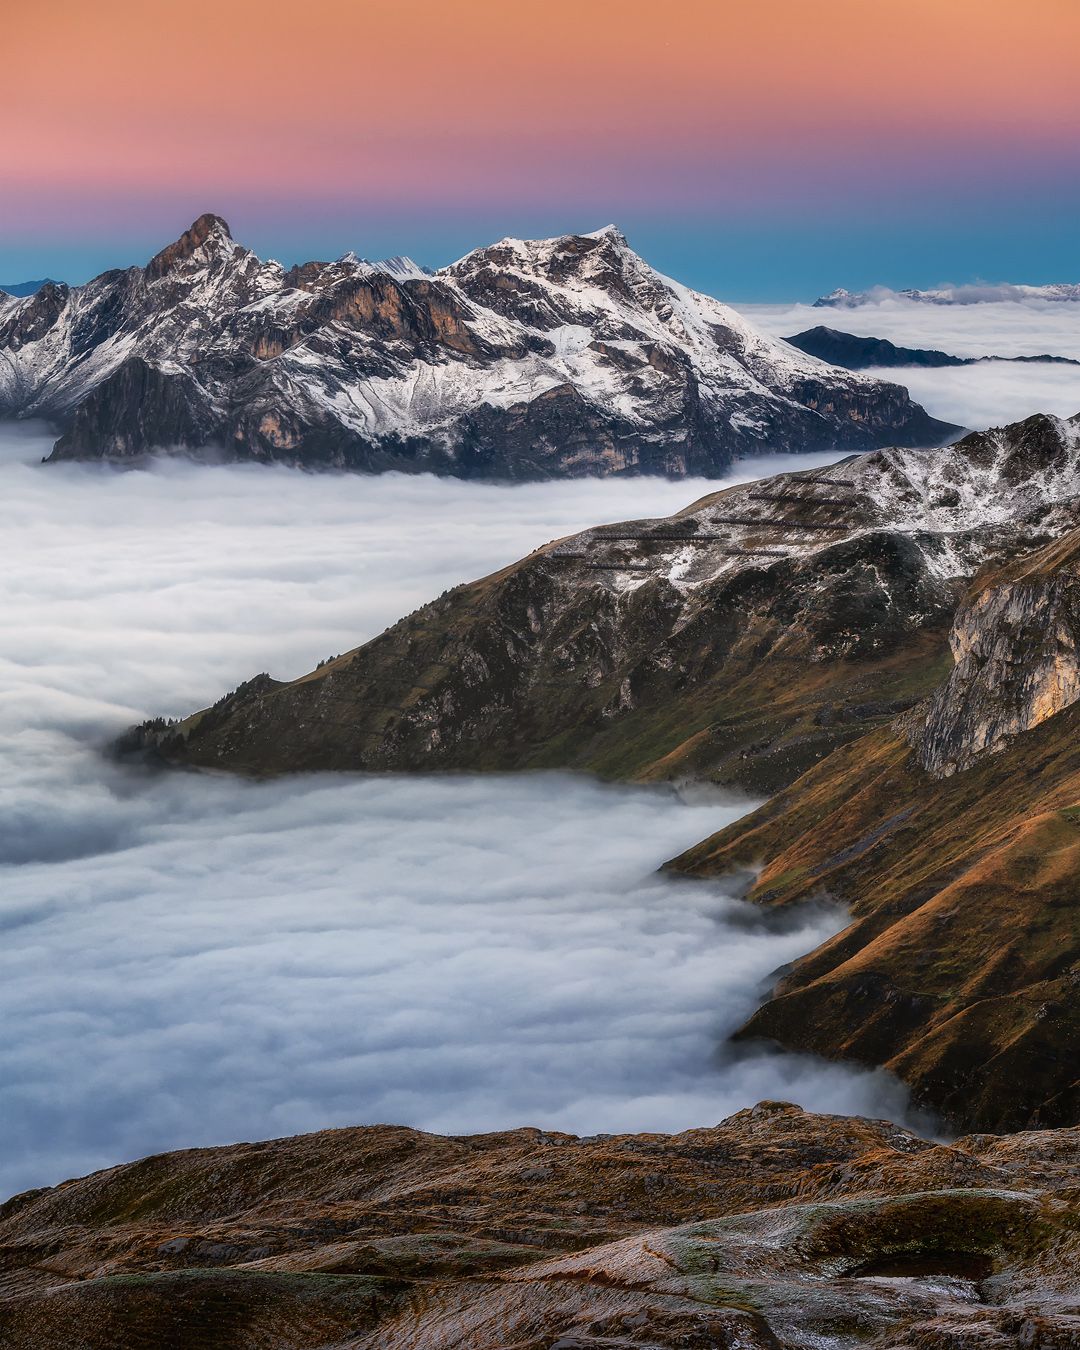 swiss, switzerland, alps, mountains, mist, fog, europe, clouds, sunset, amazing, landscape, mountains, mounatain, colours, Jakub Perlikowski